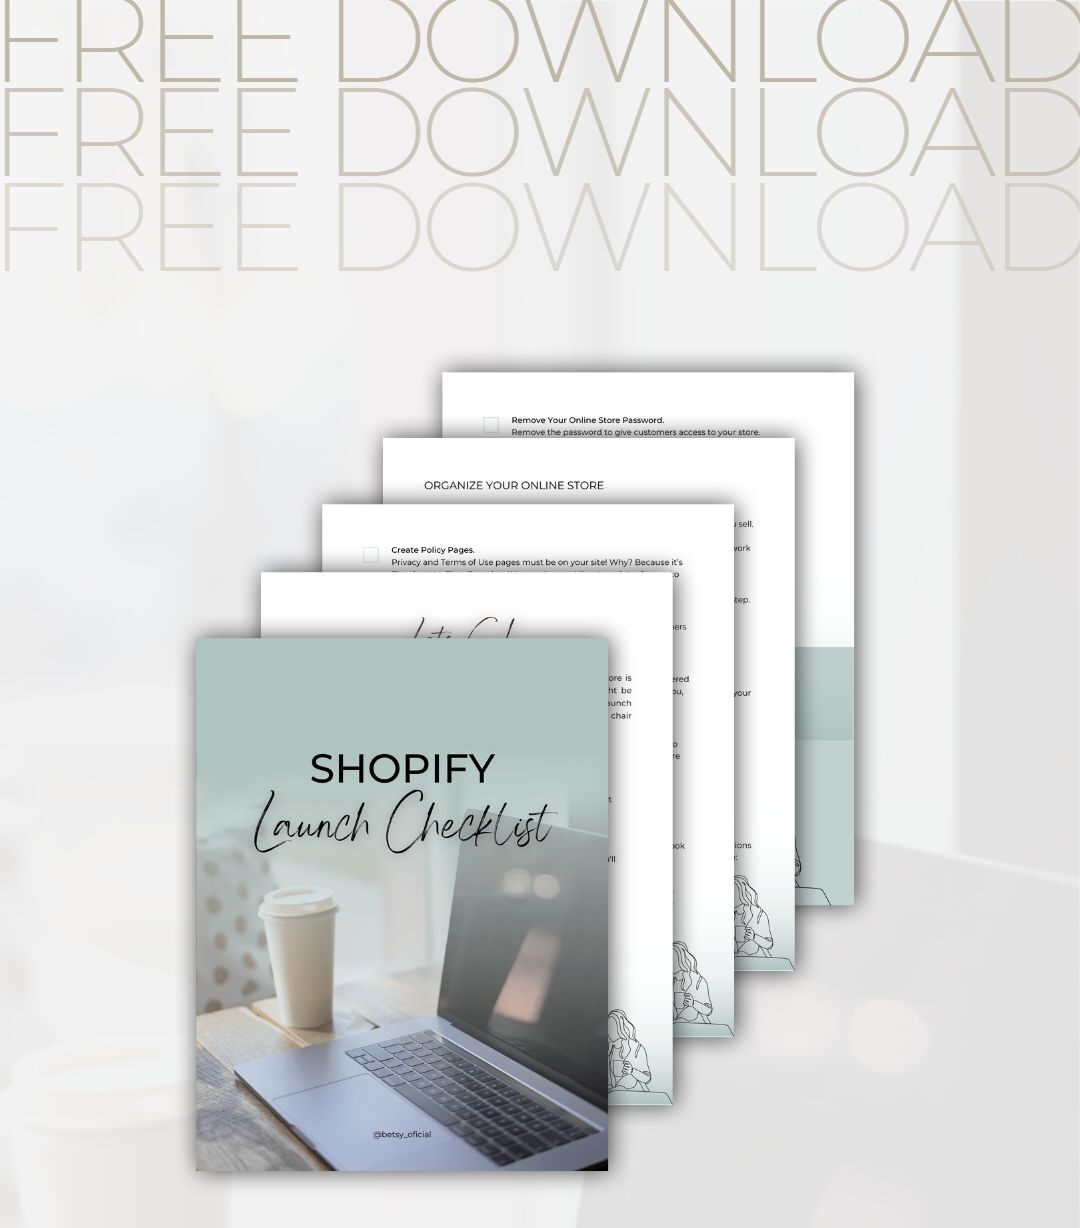 Shopify launch checklist